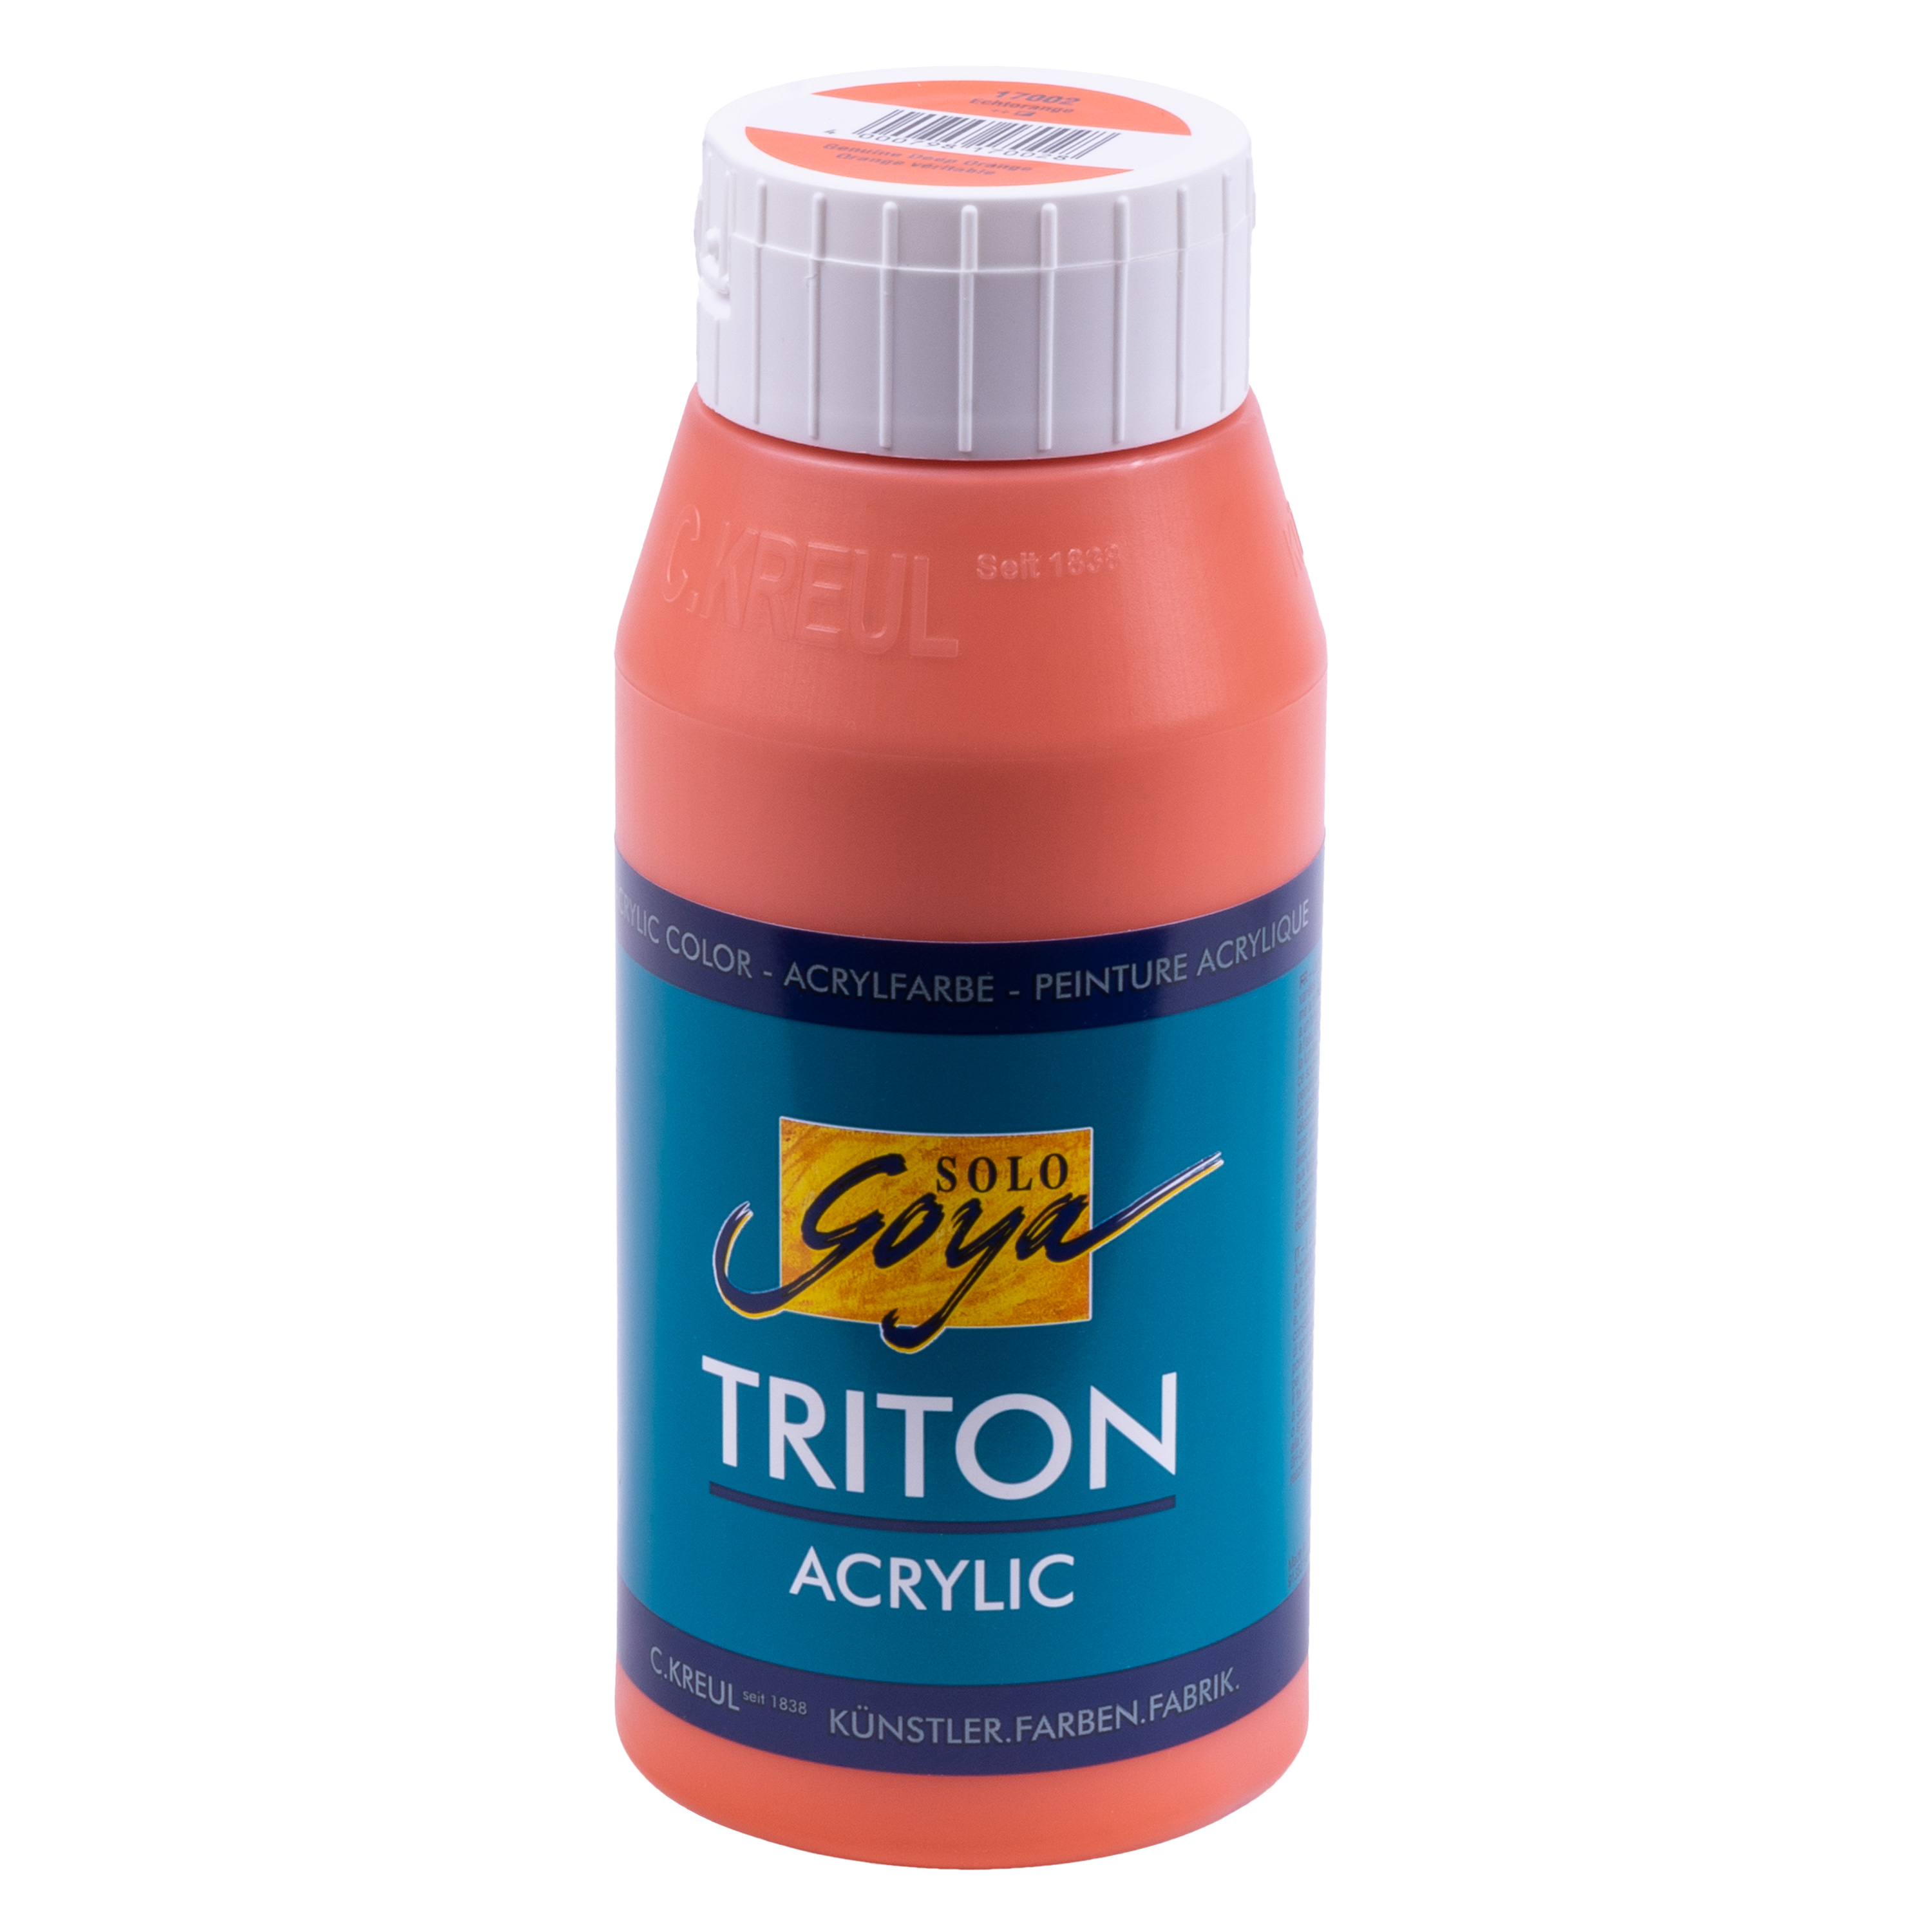 SOLO GOYA Triton Acrylfarbe, echtorange, 750 ml